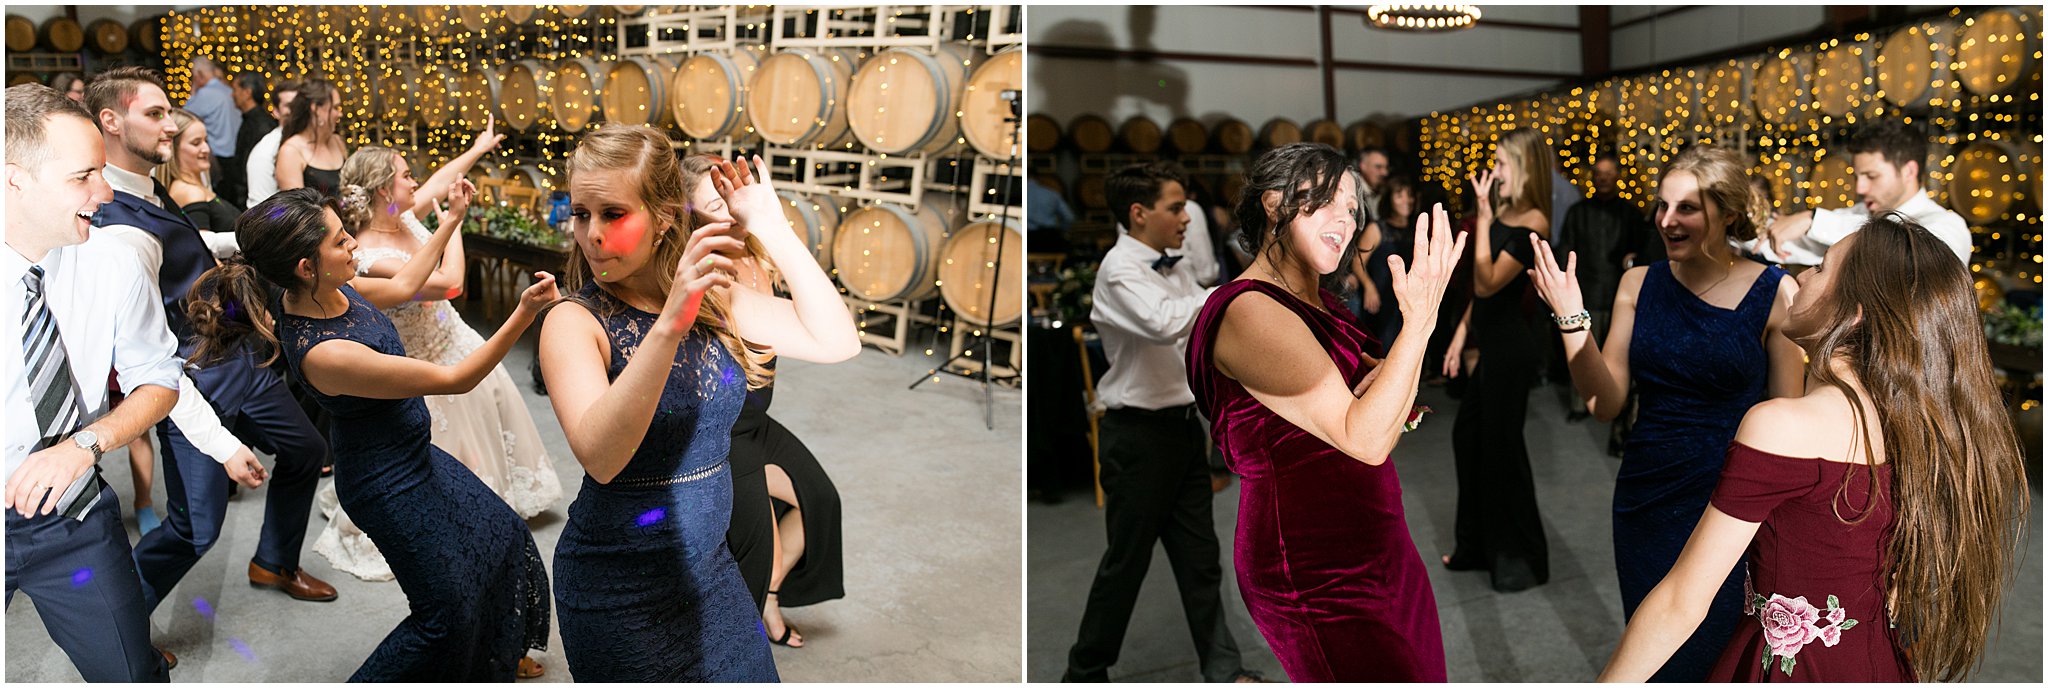 Sycamore Creek Vineyards Wedding - Live Love Leal - Fall Wedding - Bay Area Wedding Photographer - Angela Sue Photography_0142.jpg